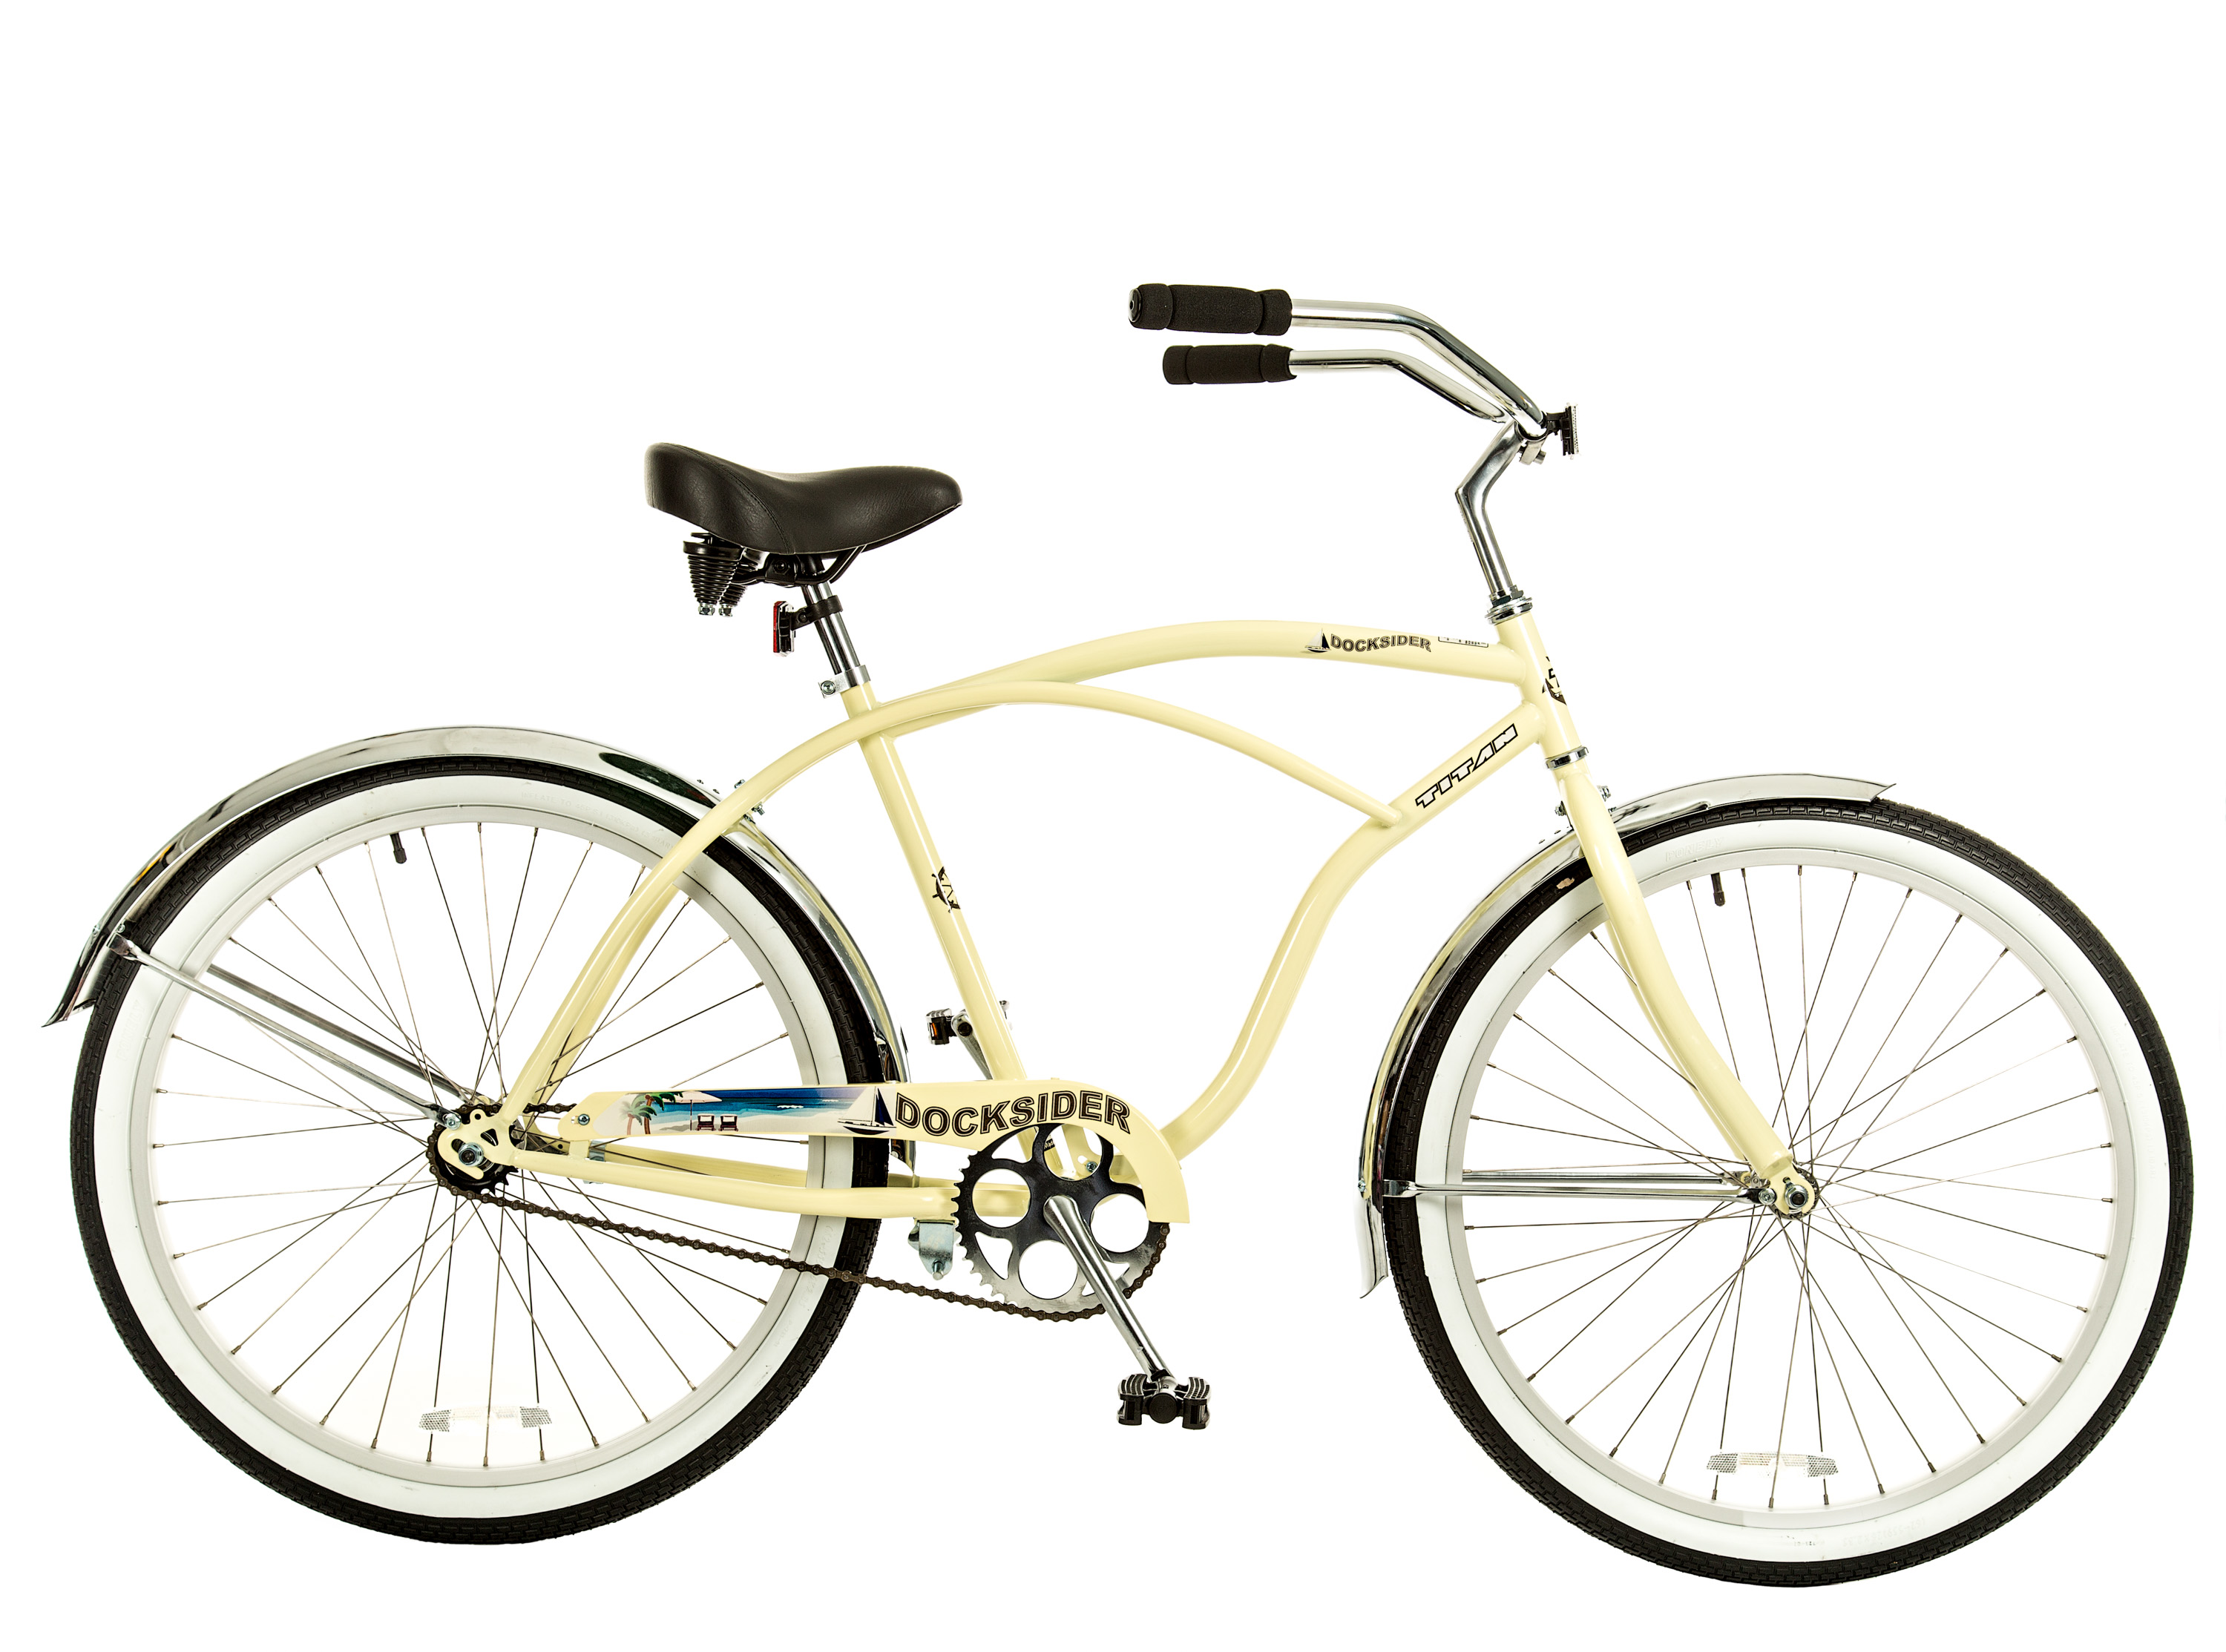 Titan Docksider Single Speed Men's Beach Cruiser Bicycle, 26-Inch Wheels, 18-Inch Frame, Glossy Cream Color